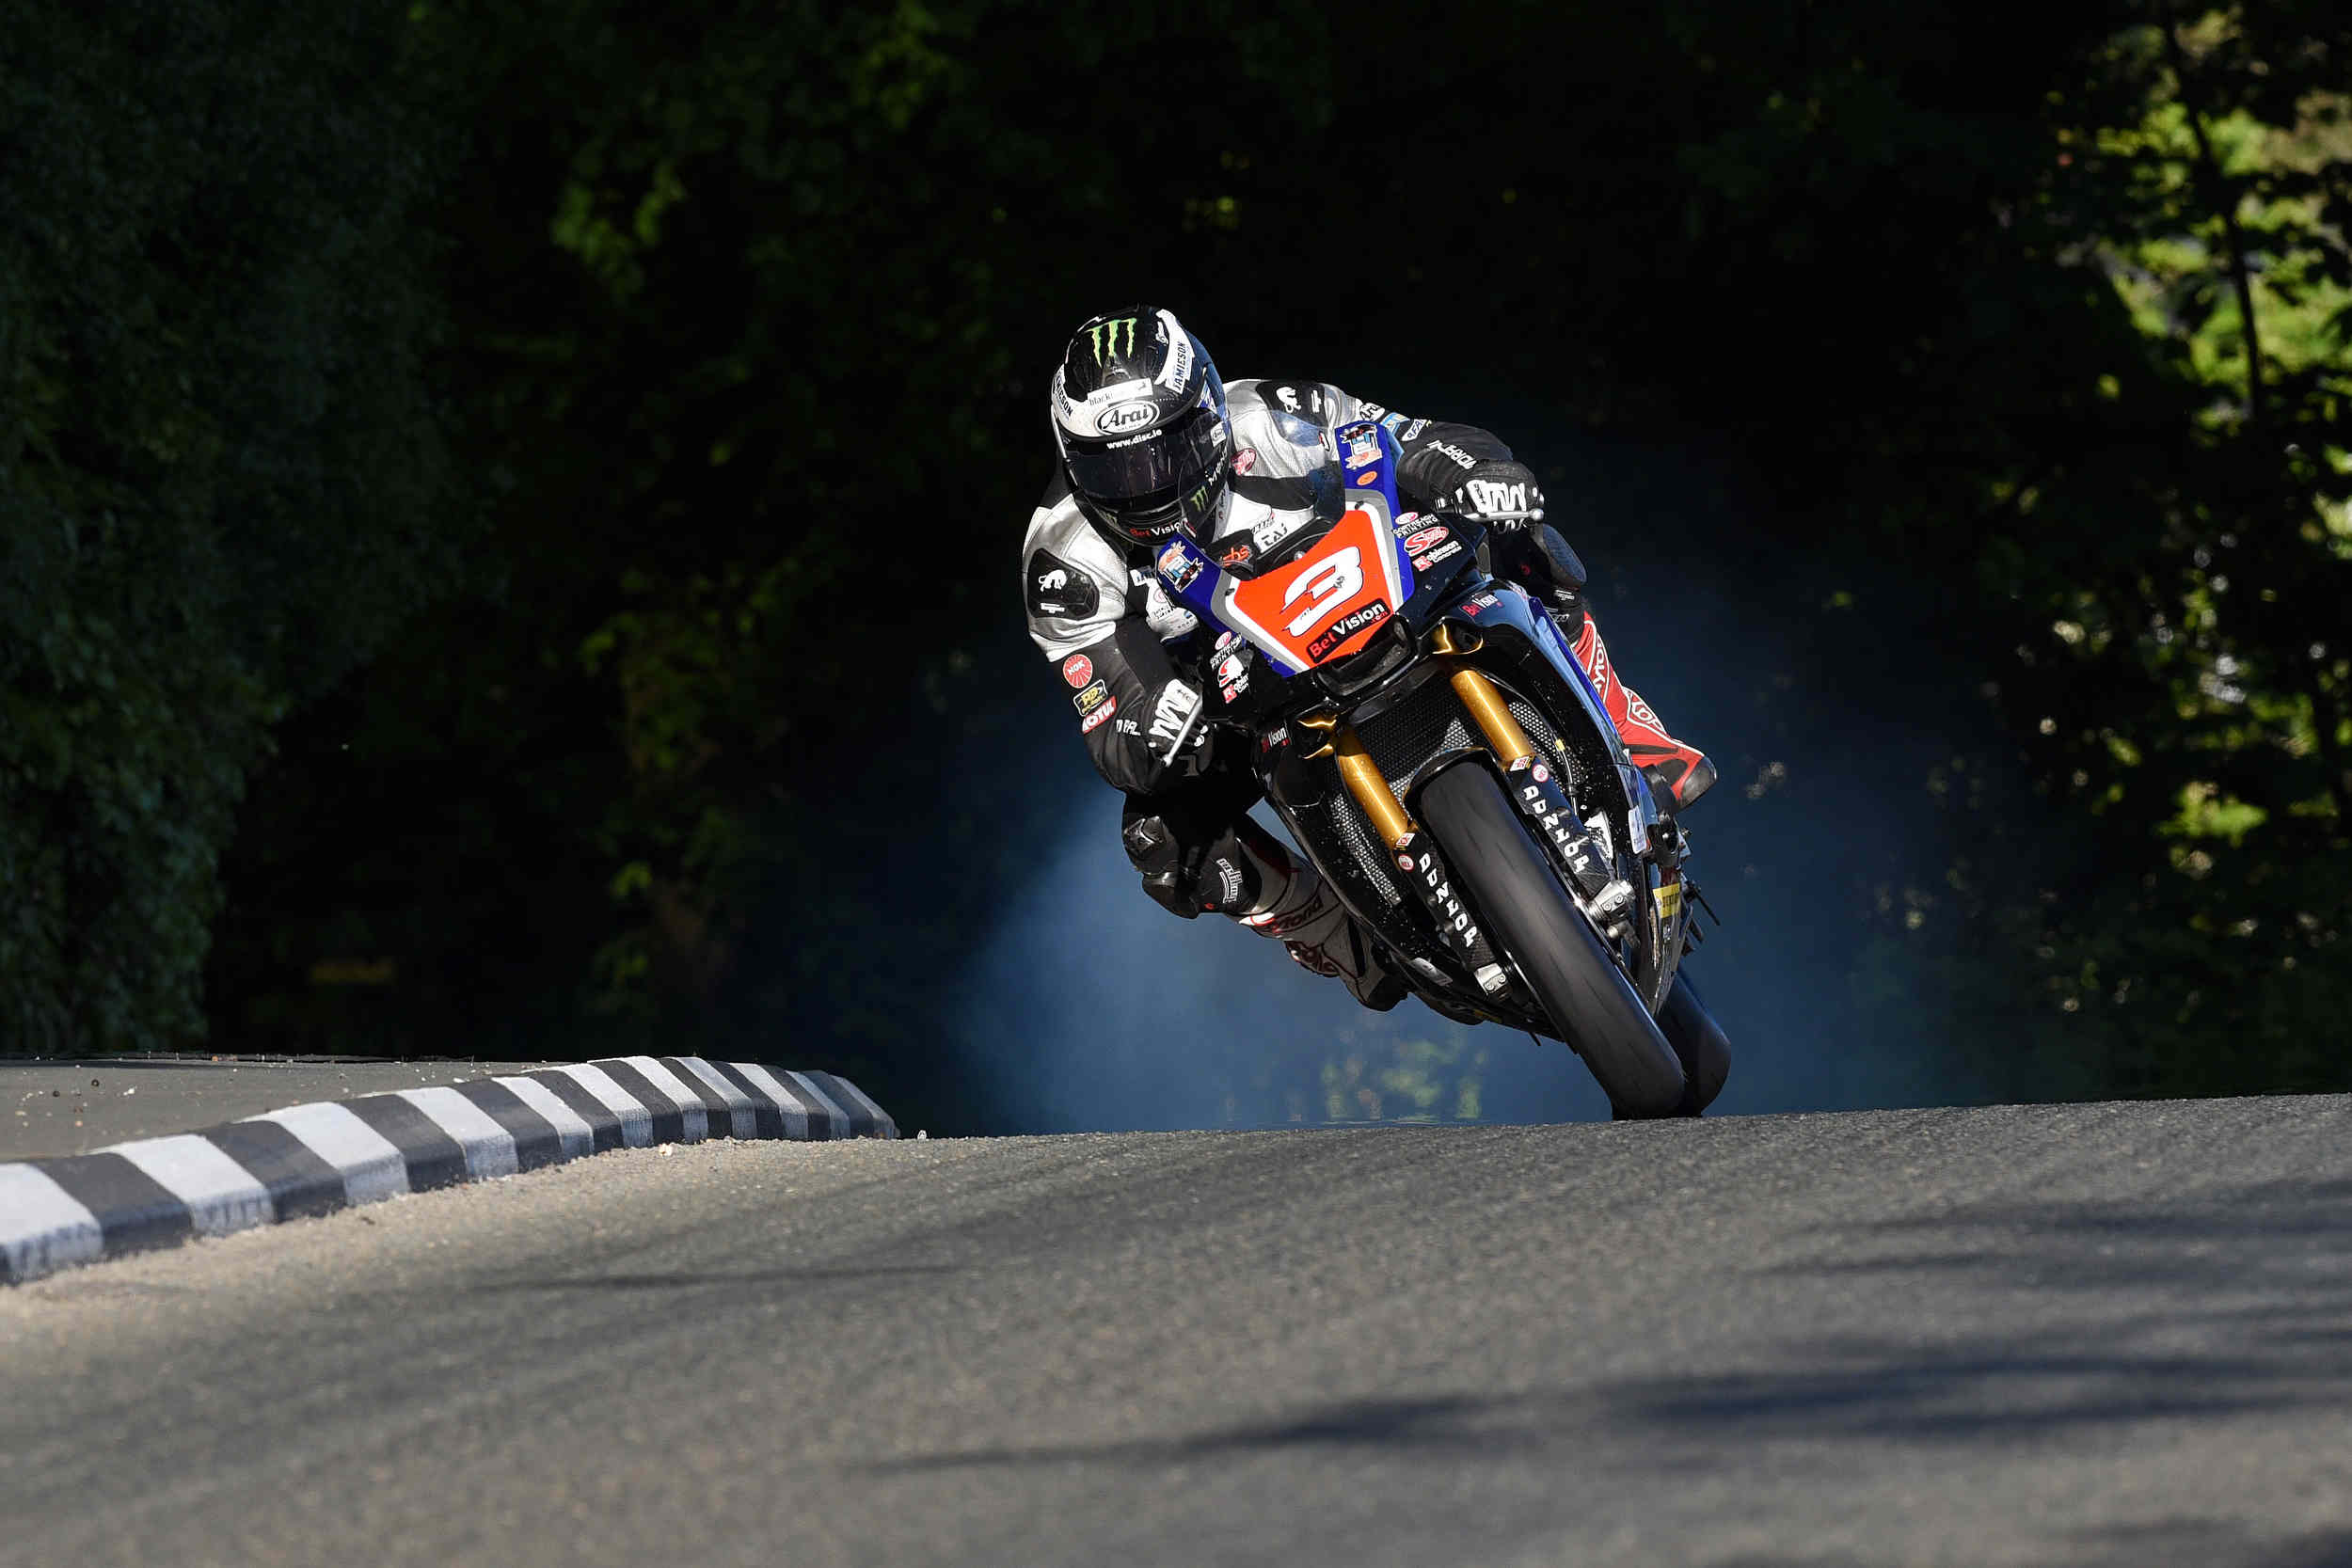  TT 2015 qualifying - Michael Dunlop 